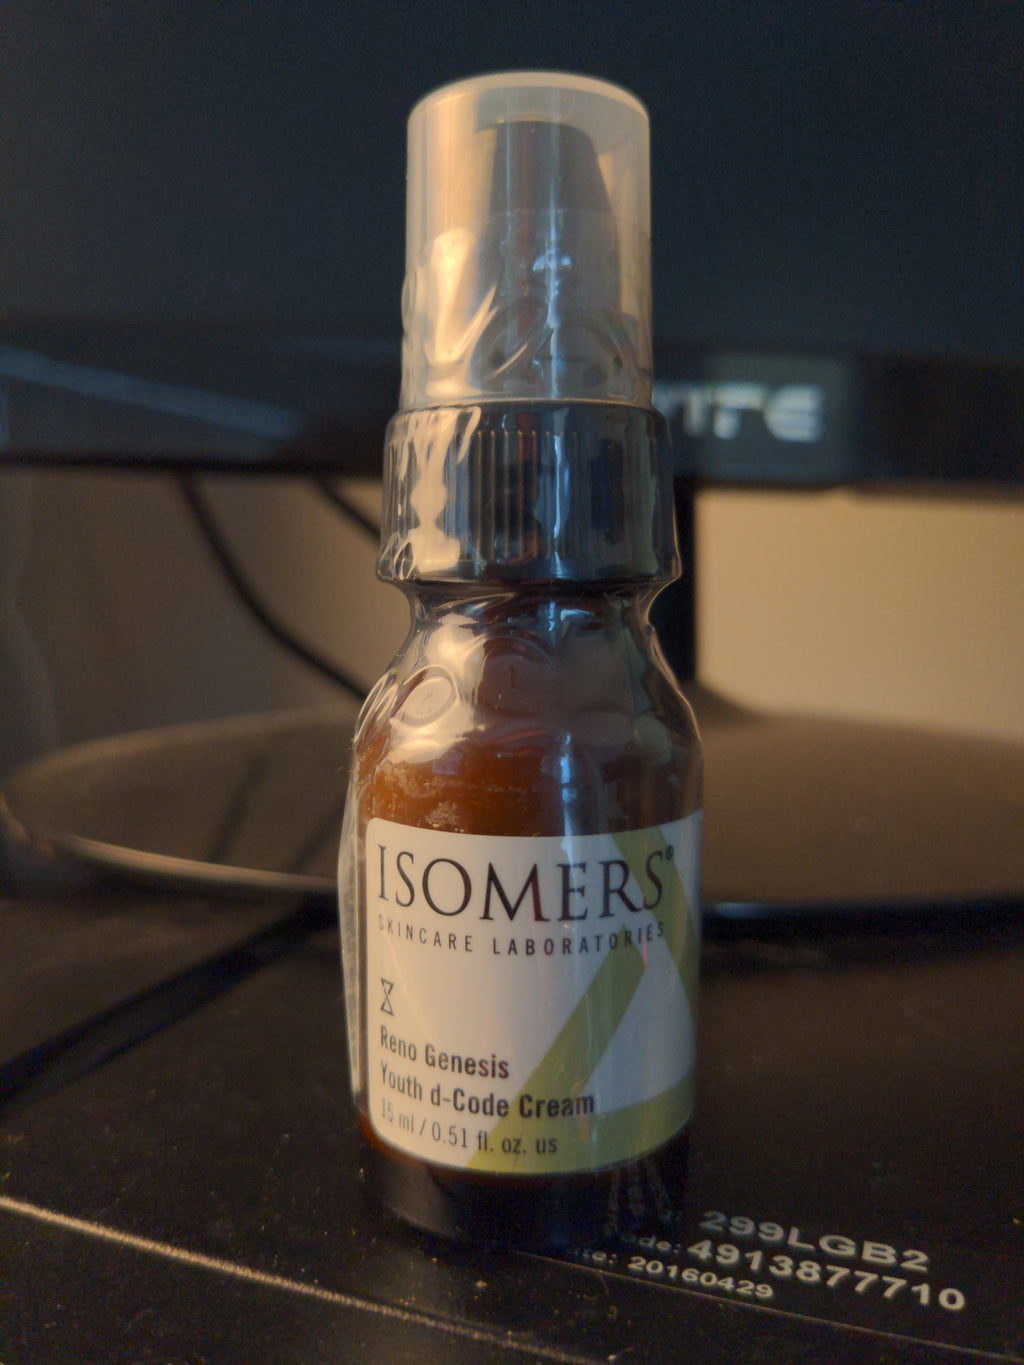 Isomers Reno Genesis Youth d-Code Cream Sealed